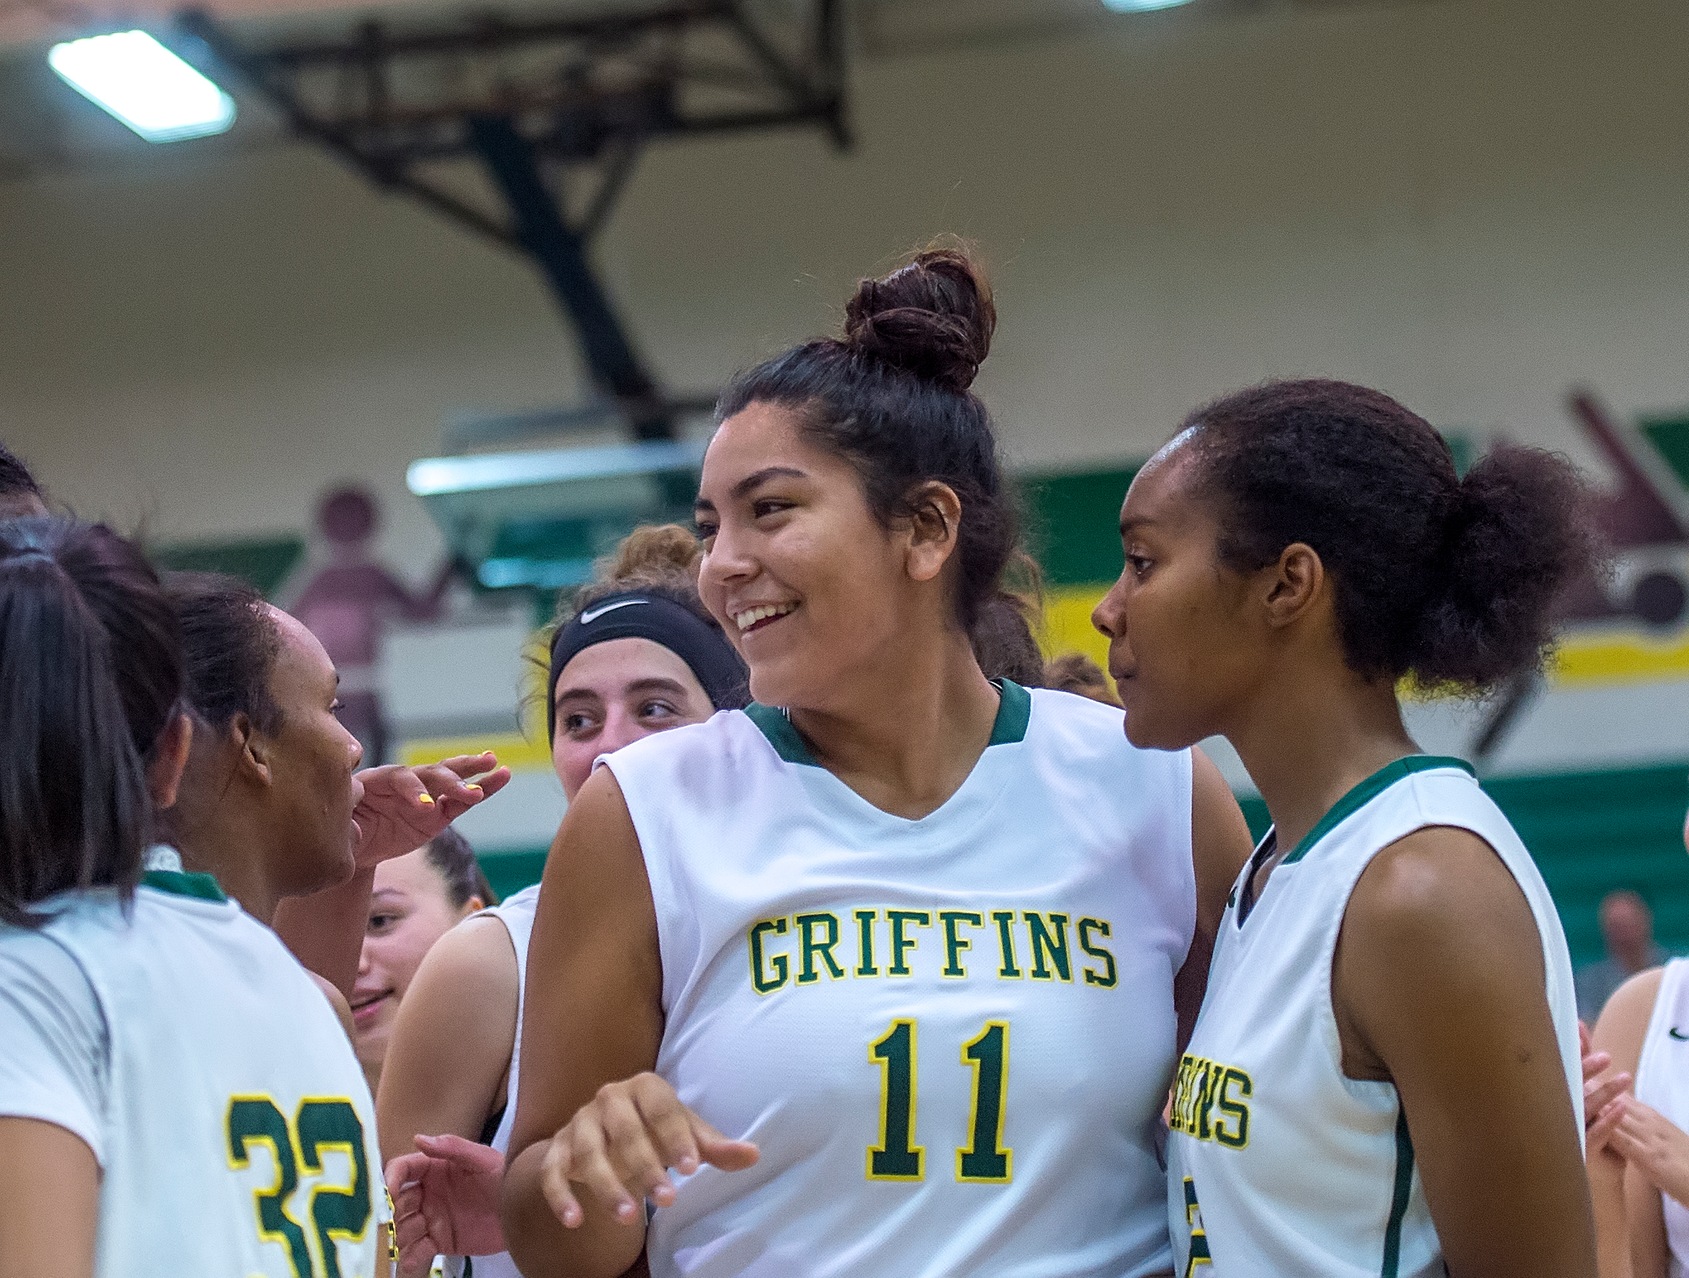 Griffins Basketball dominates Santa Ana and Advances!